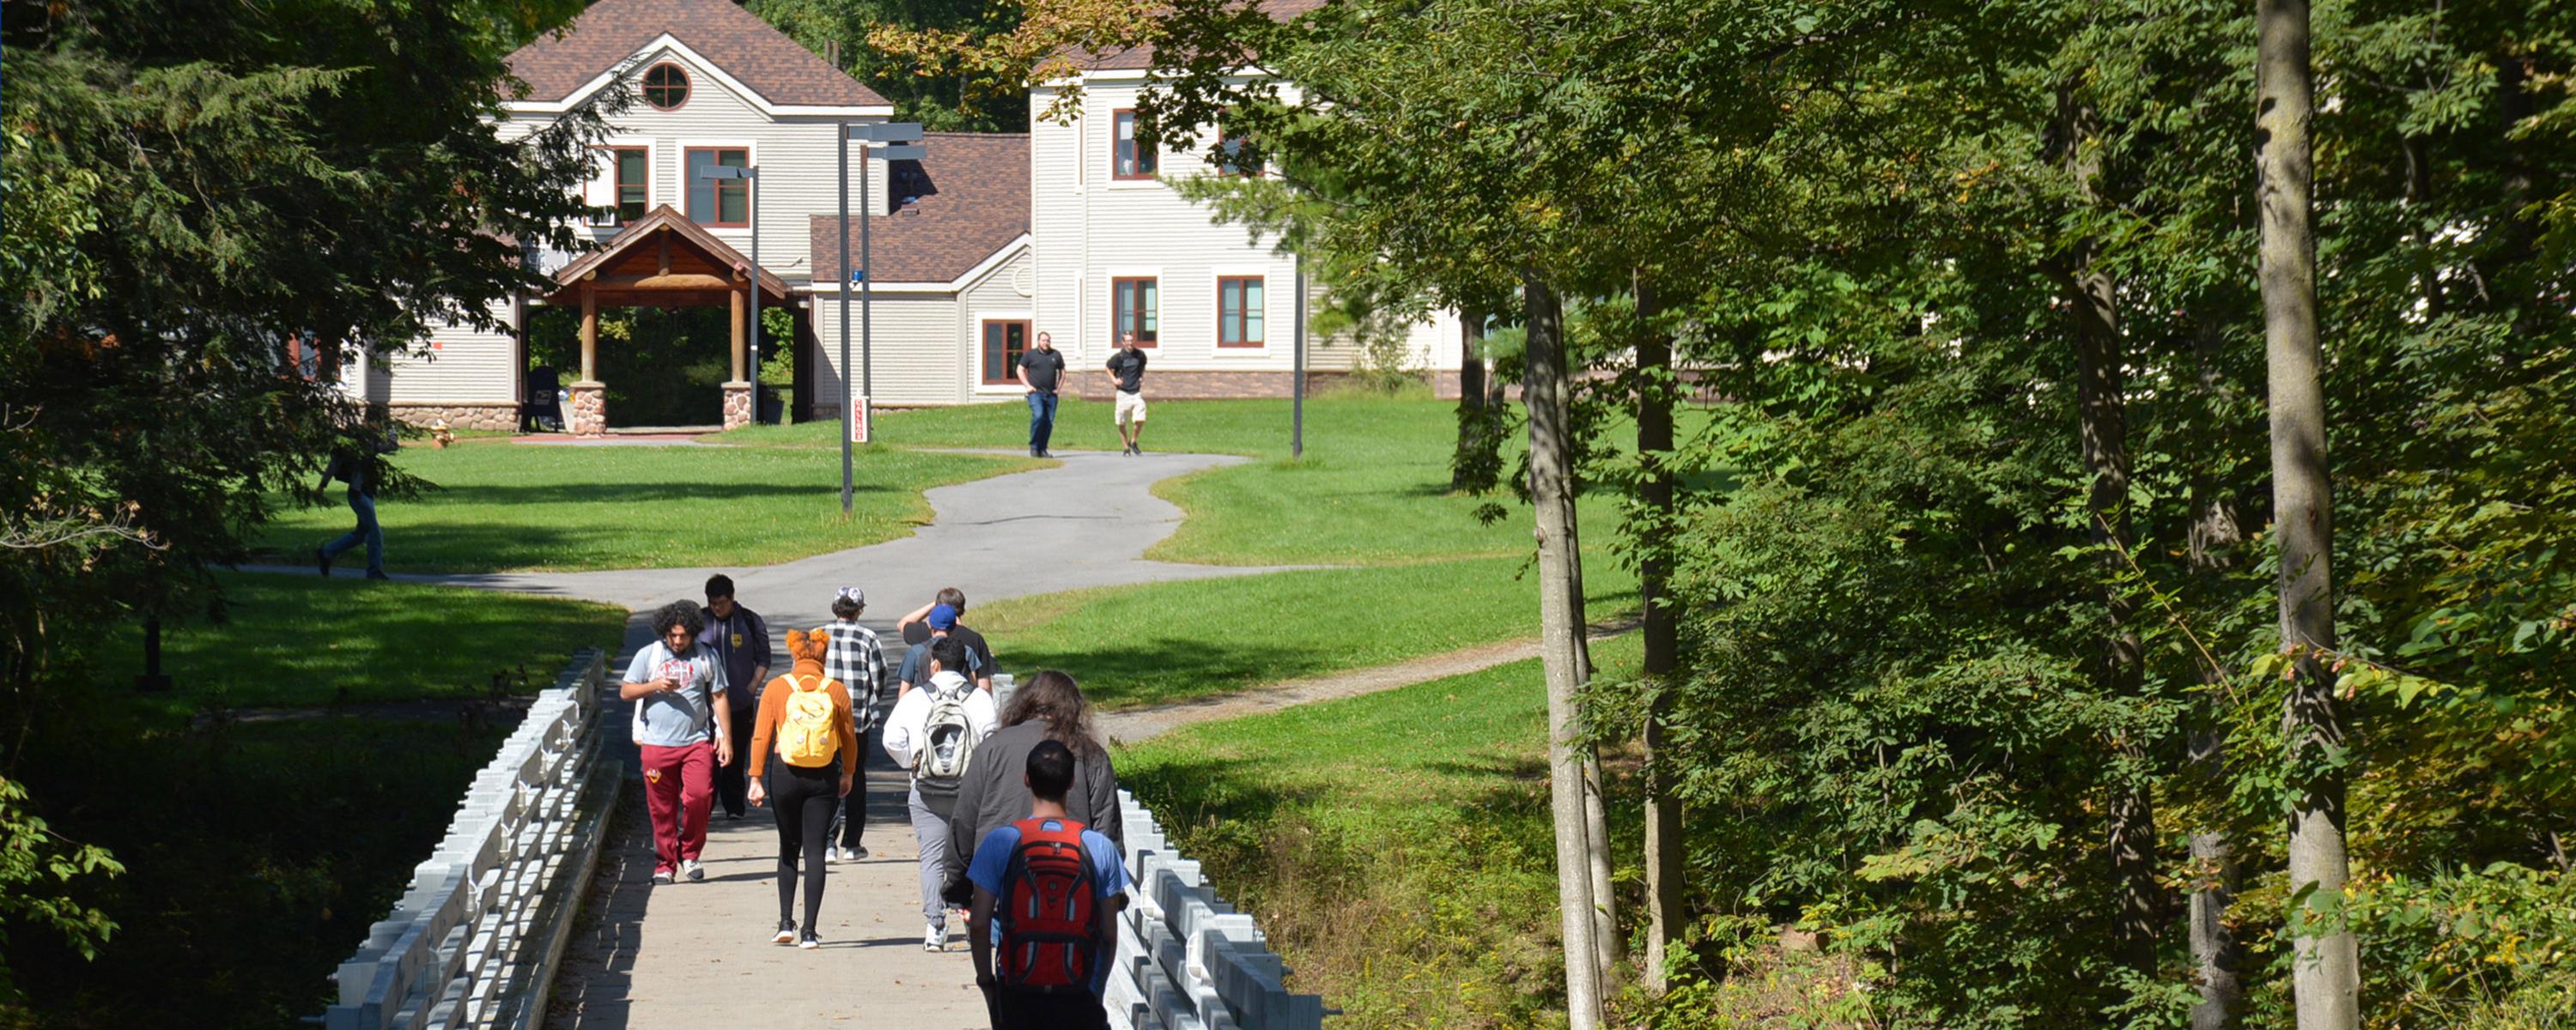 Students walking near Adirondack Residence Hall